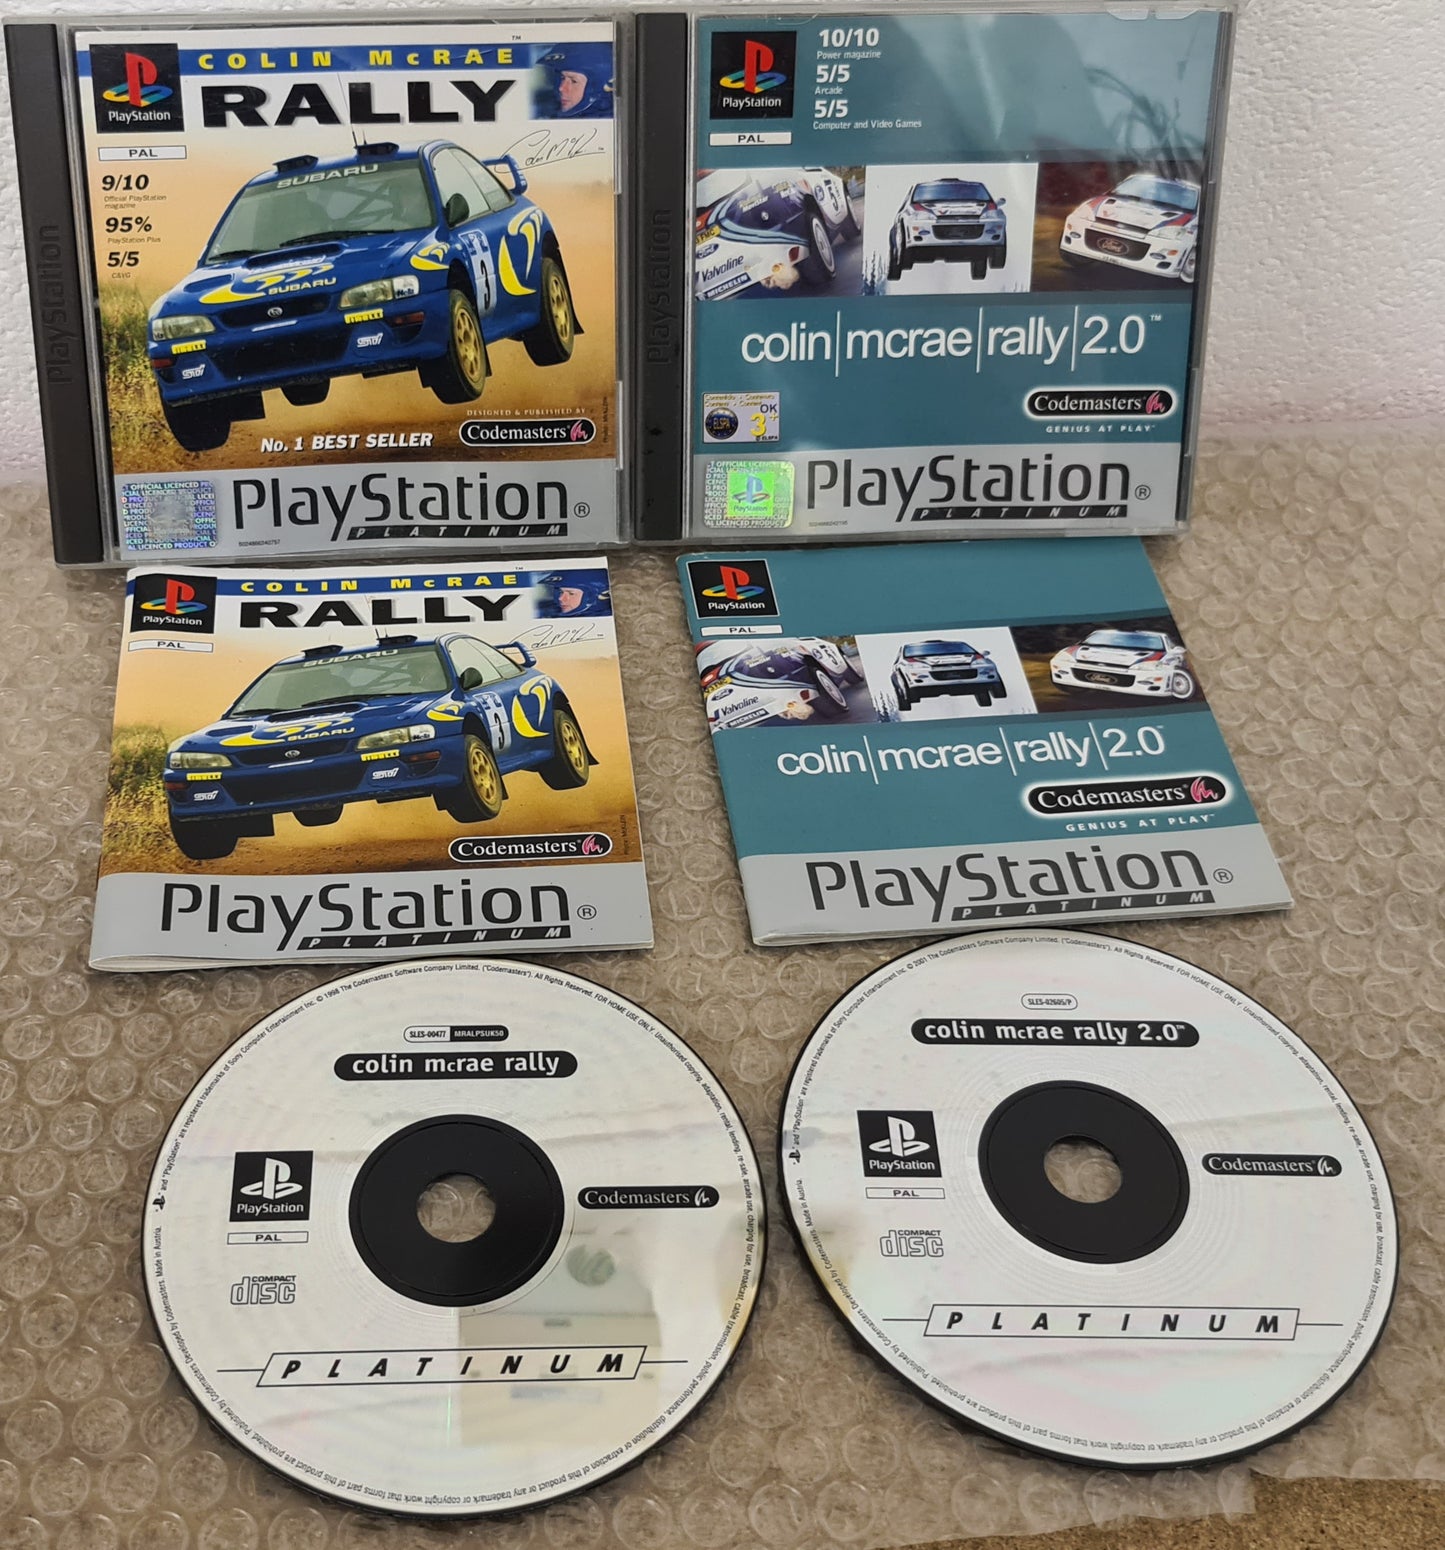 Colin McRae Rally 1 & 2.0 Platinum Sony Playstation 1 (PS1) Game Bundle